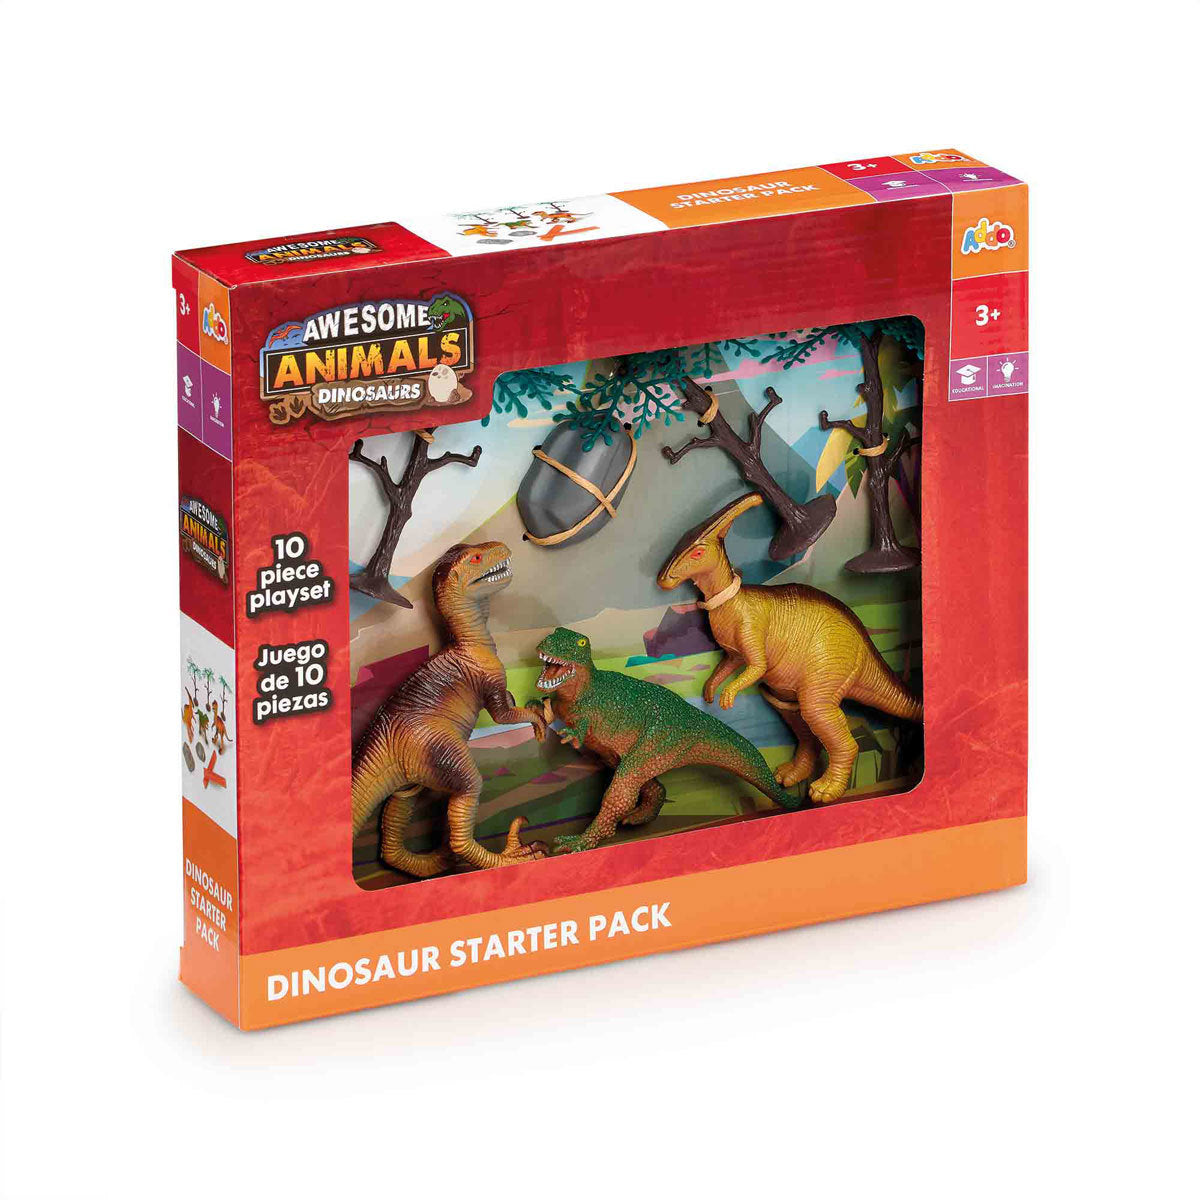 Awesome Animals Dinosaur Starter Pack